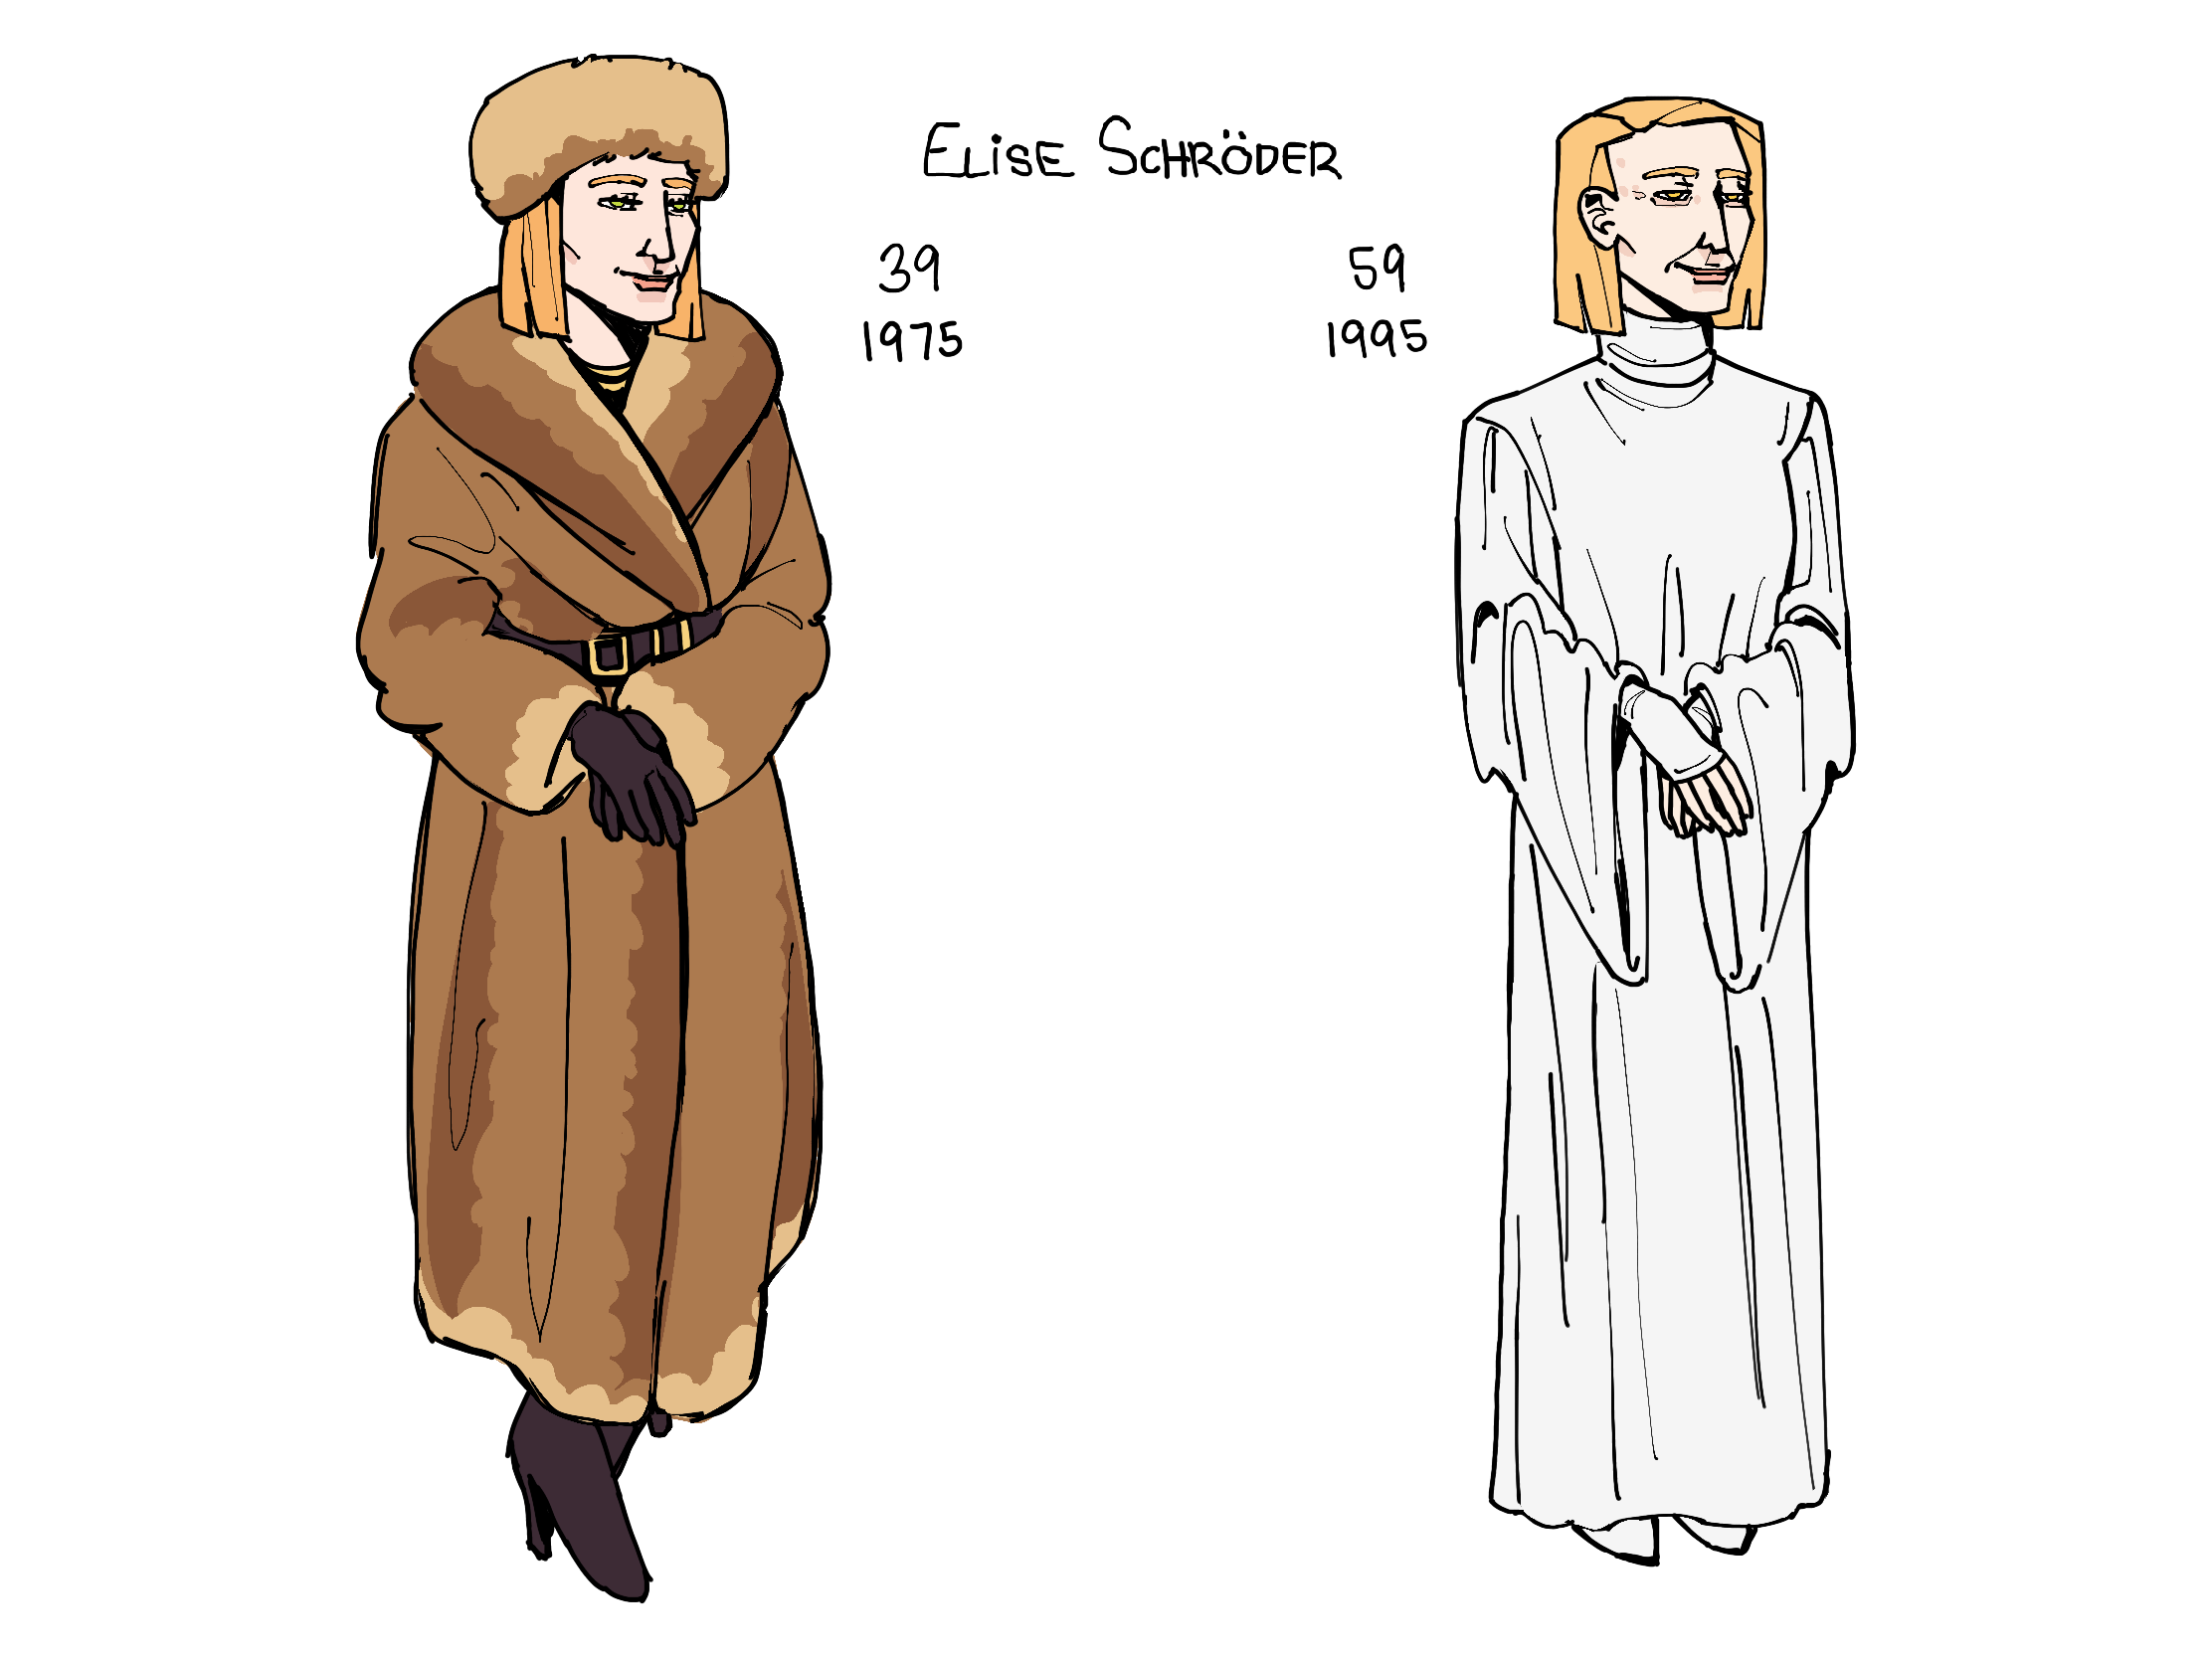 character sheet of elise